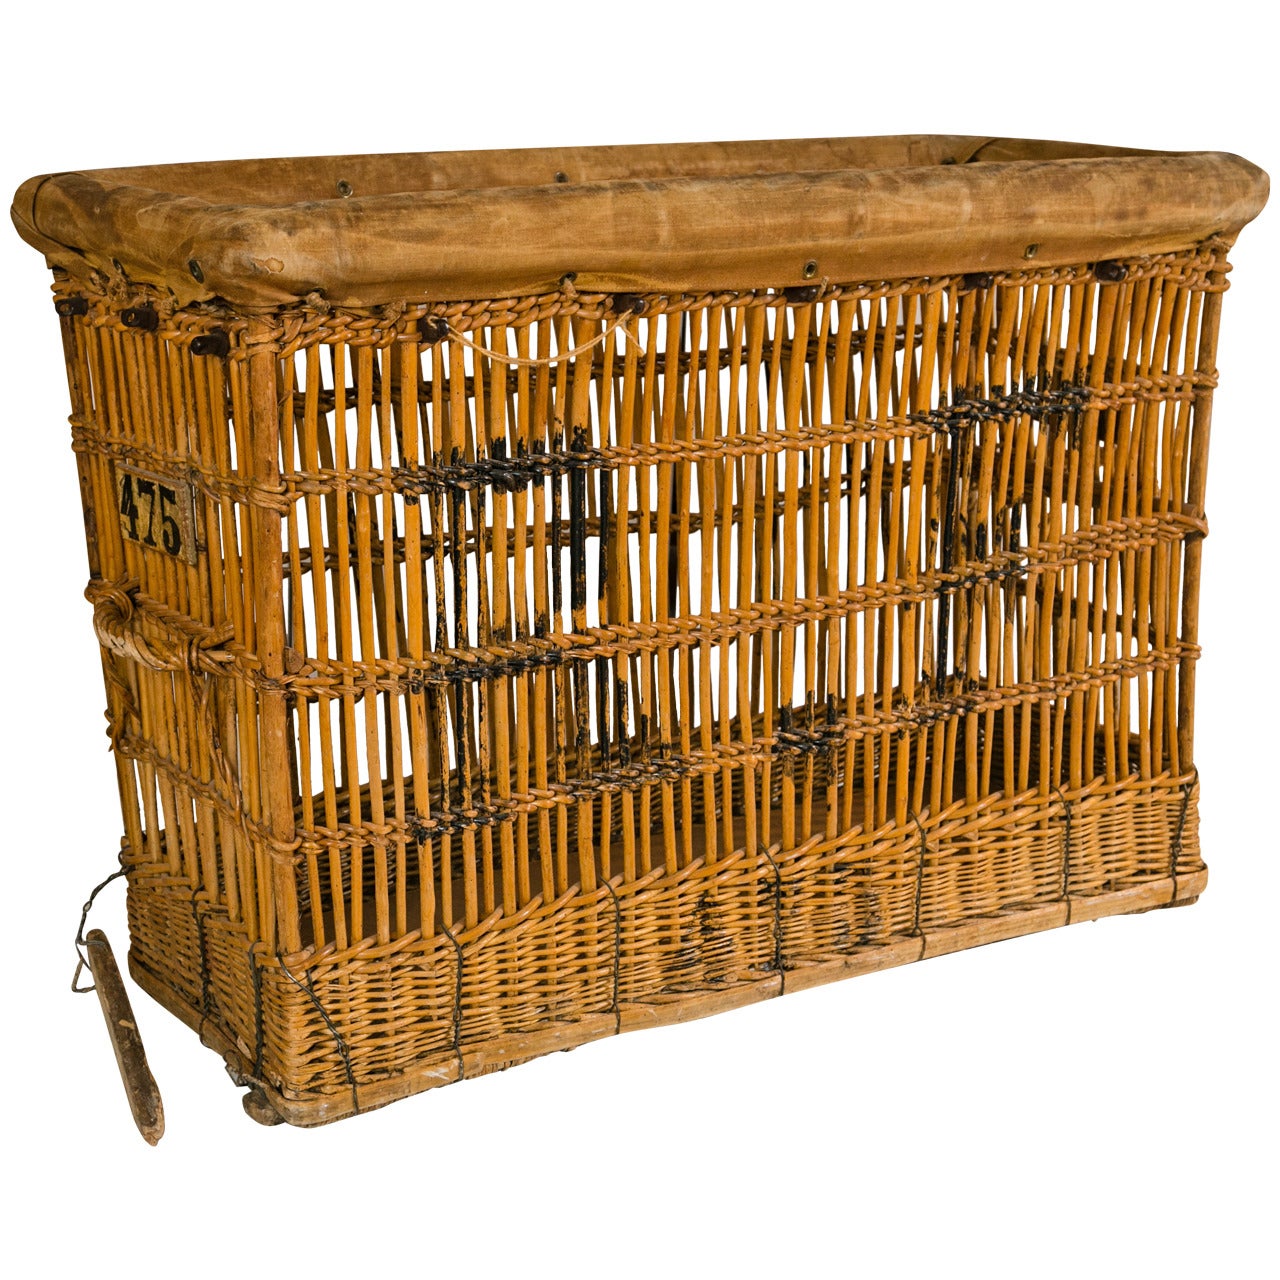 Antique Republic of France Army Bread Basket